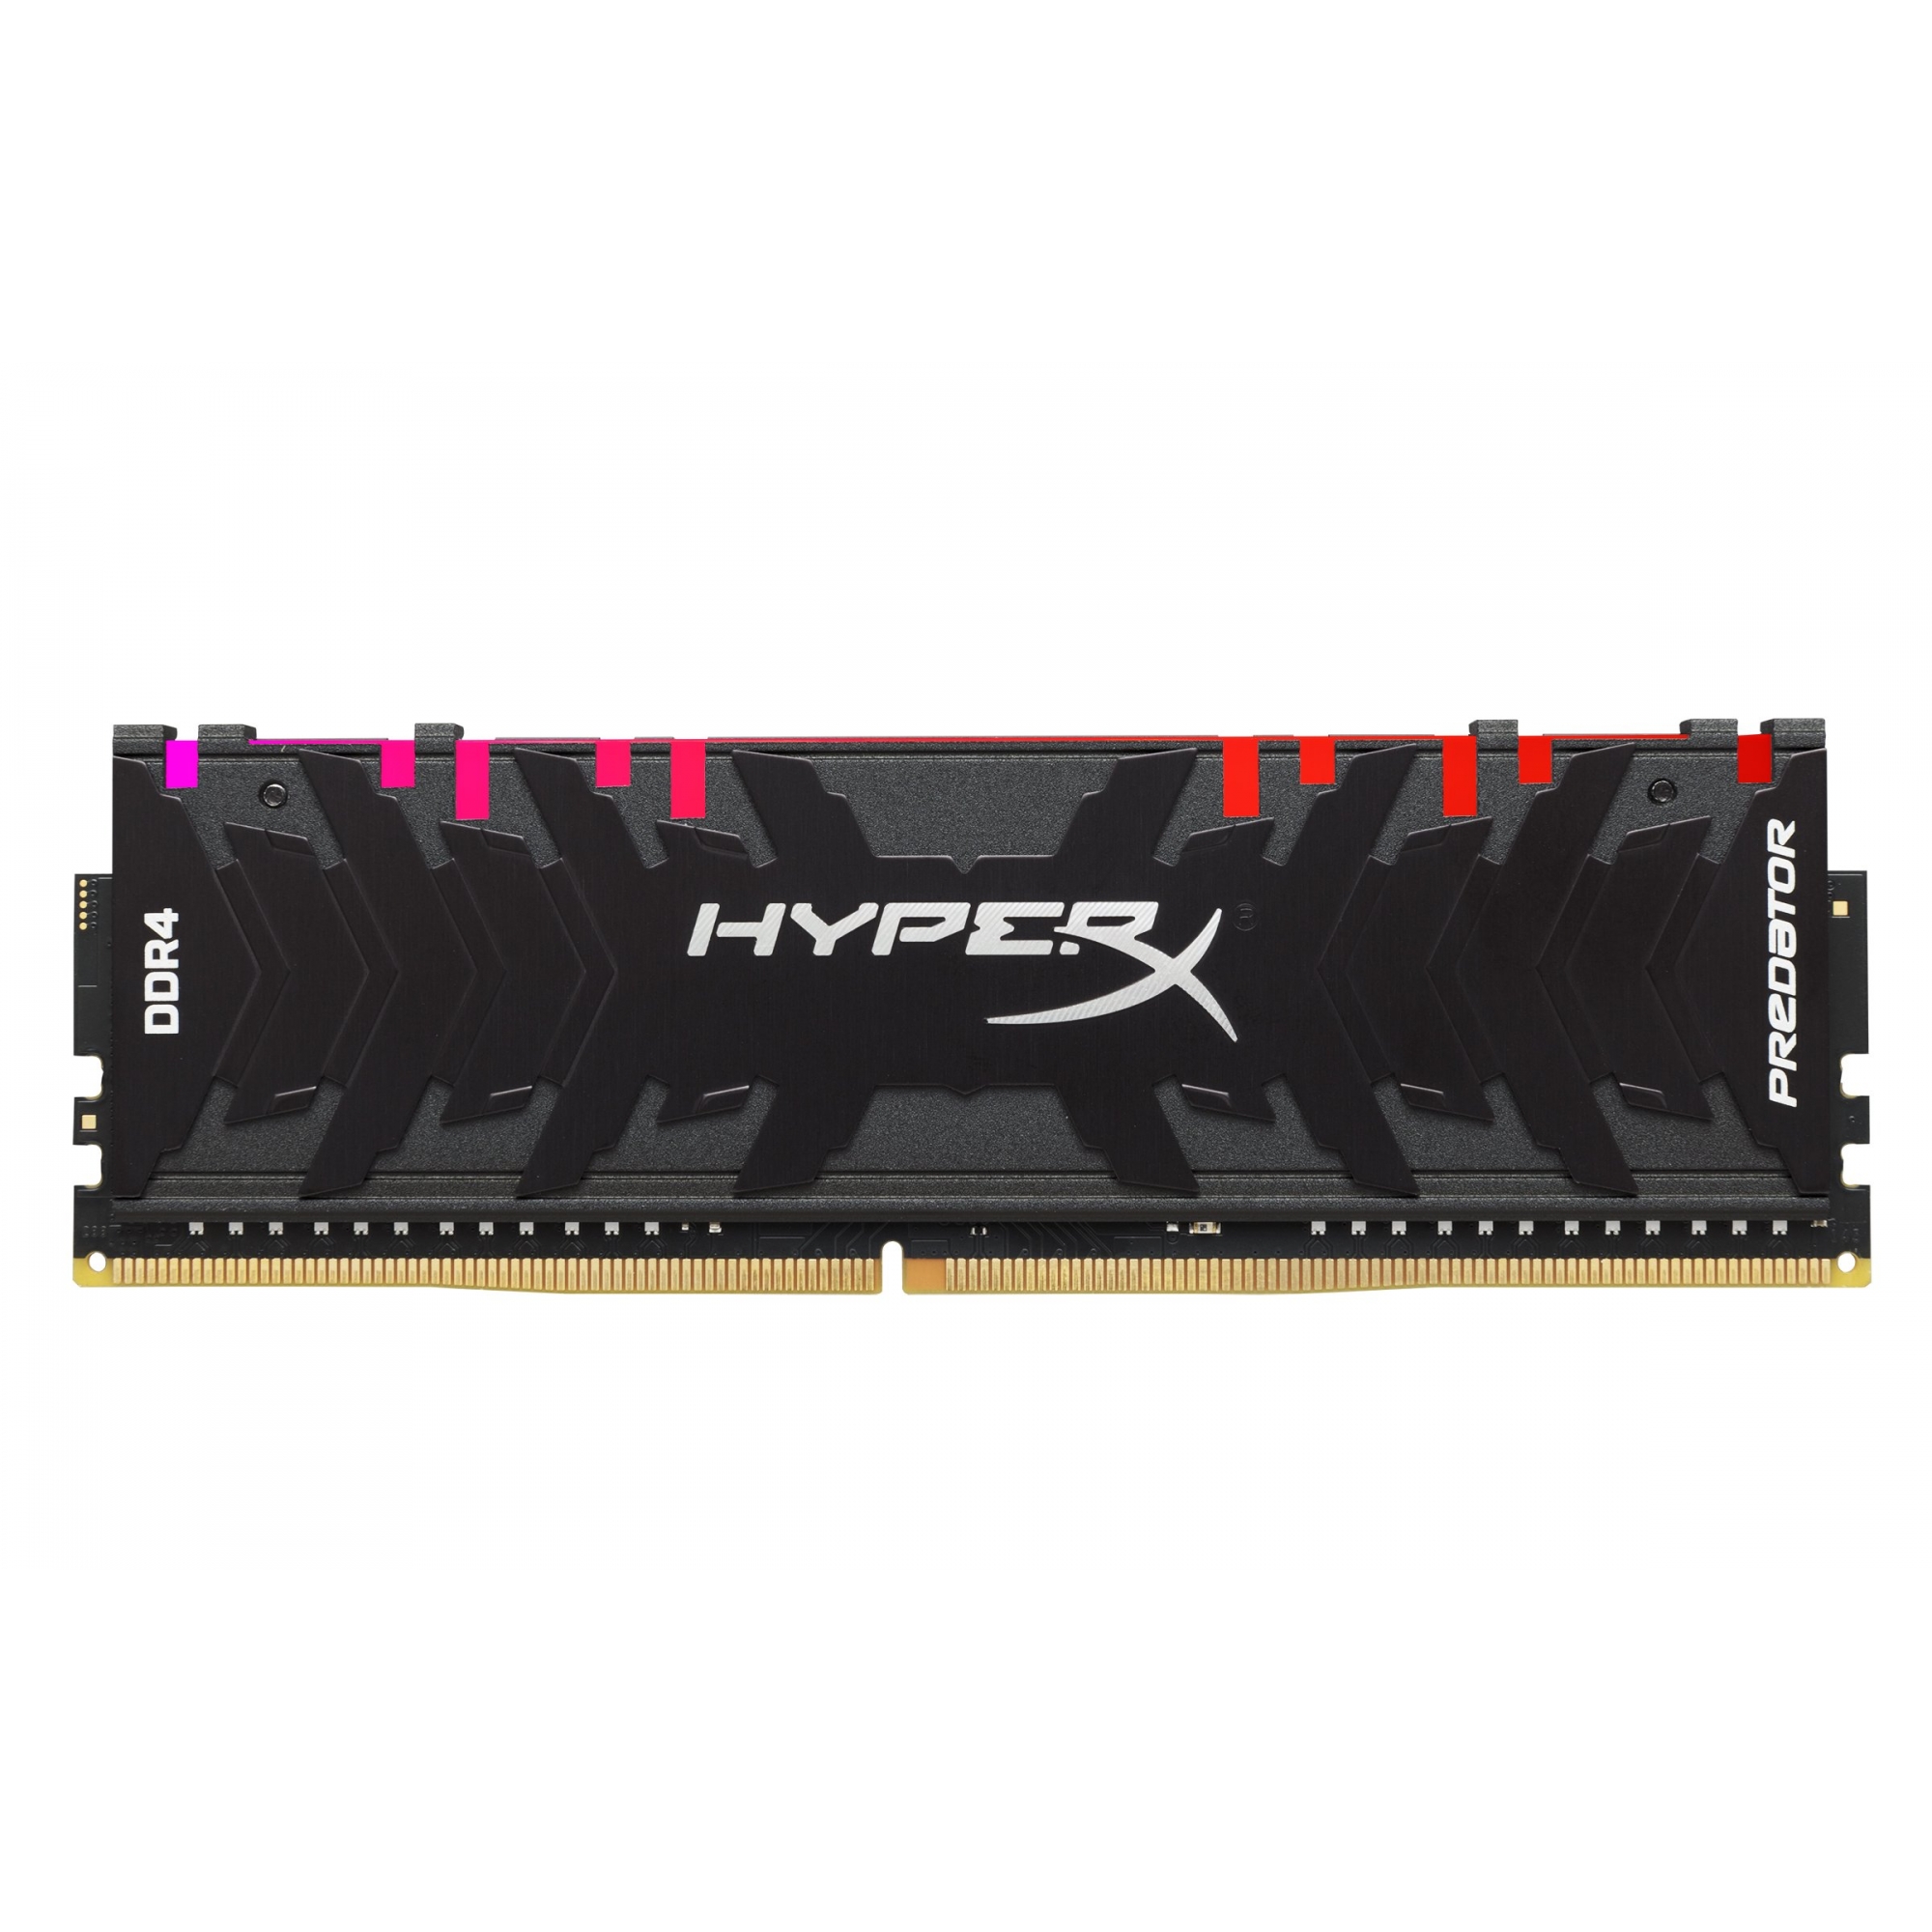 Memória DDR4 Kingston HyperX Predator RGB, 16GB 3200MHz - HX432C16PB3A/16